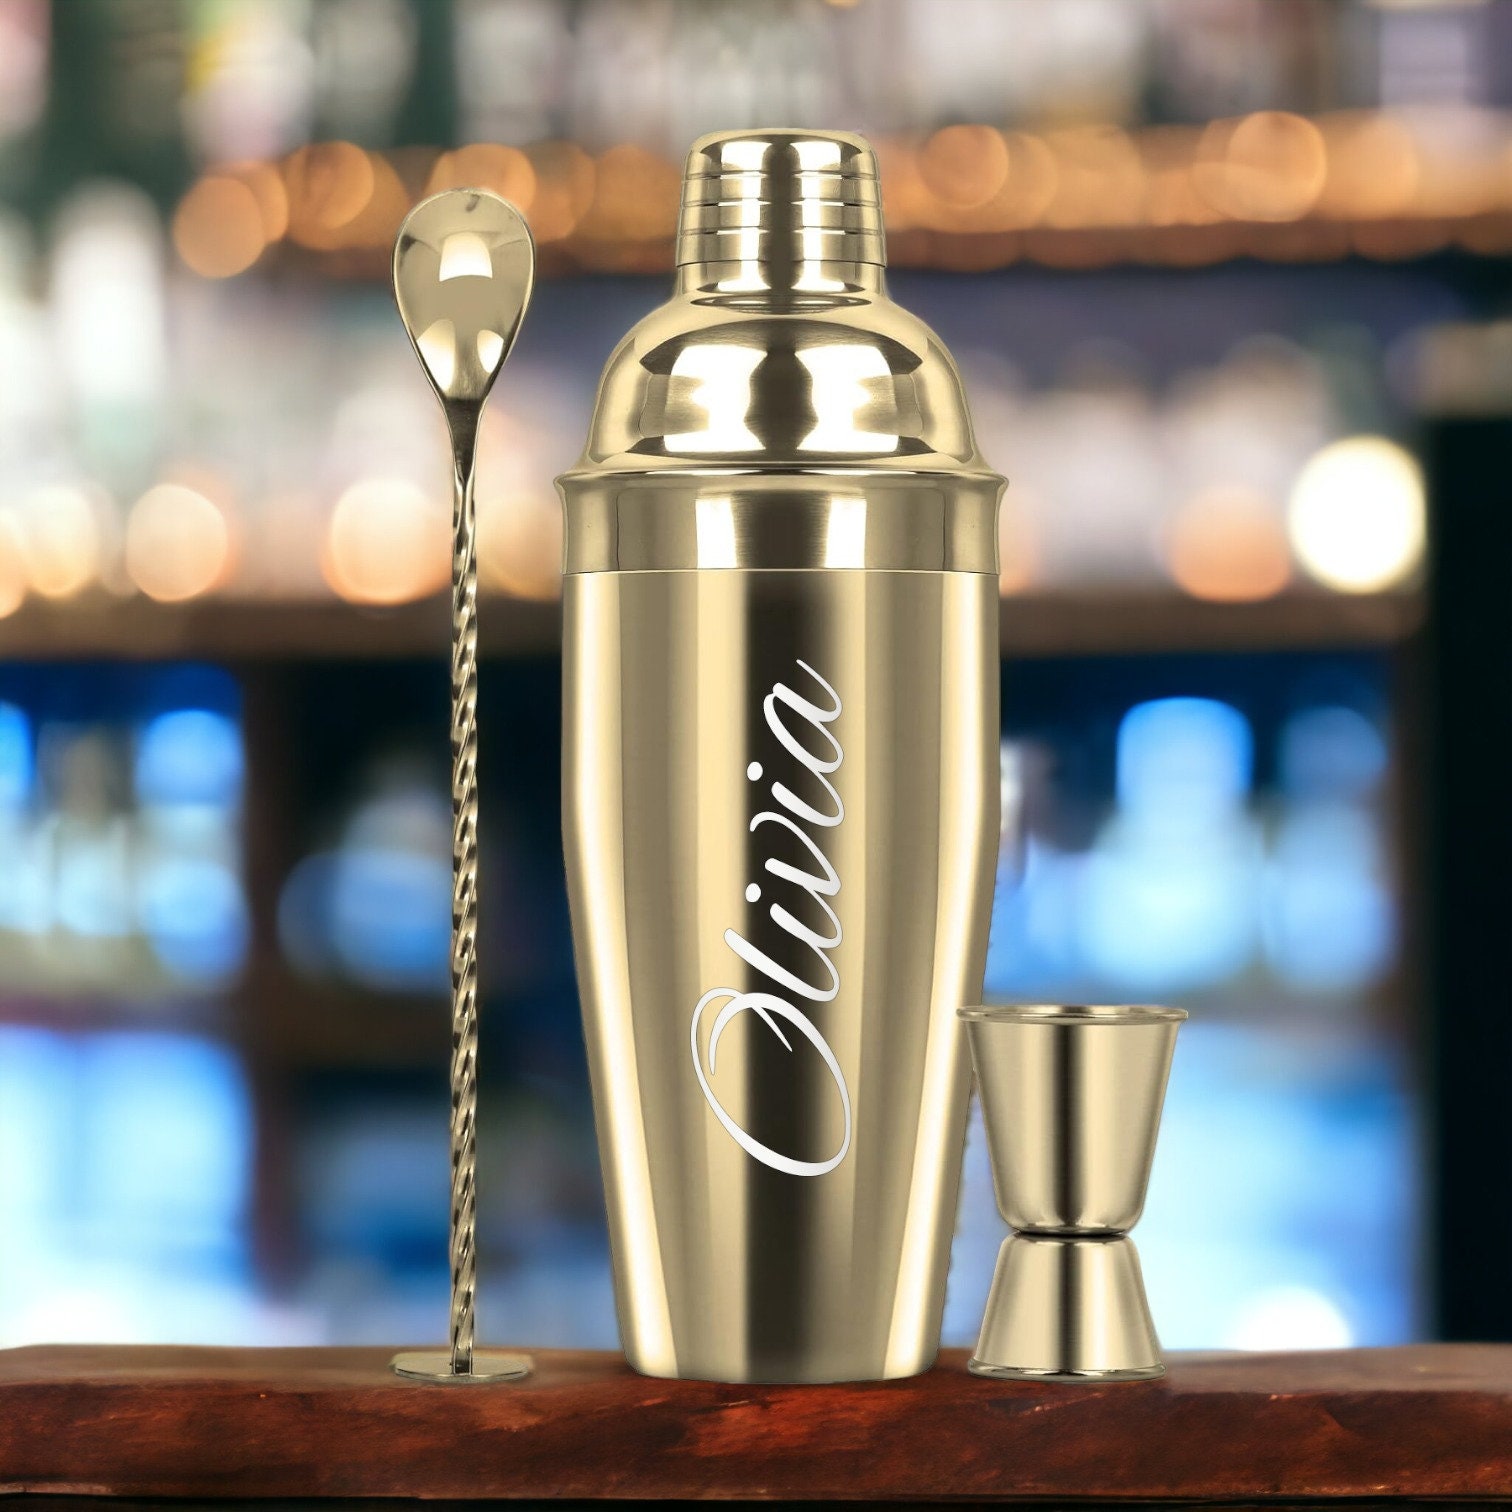 24oz Cocktail Shaker Set Bartender Kit with 2 Stemless Martini